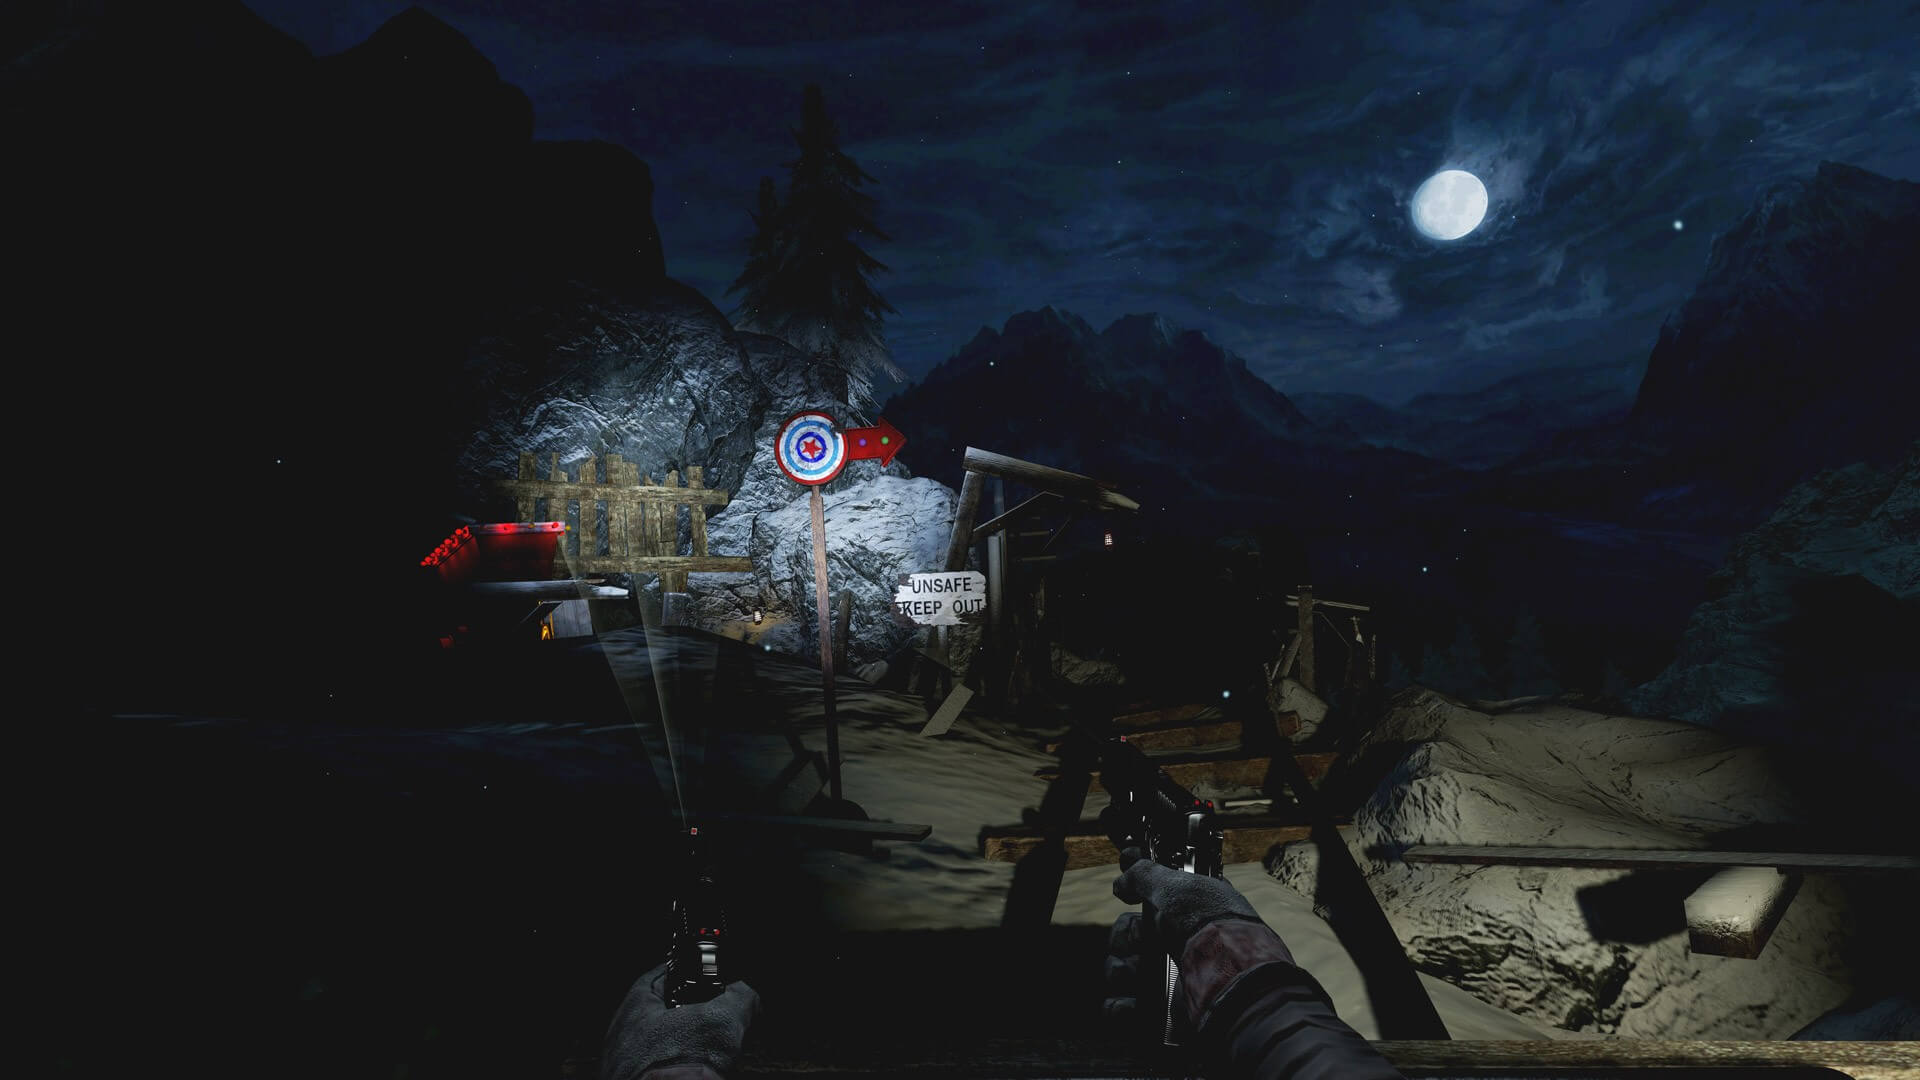 Until Dawn: Rush of Blood VR